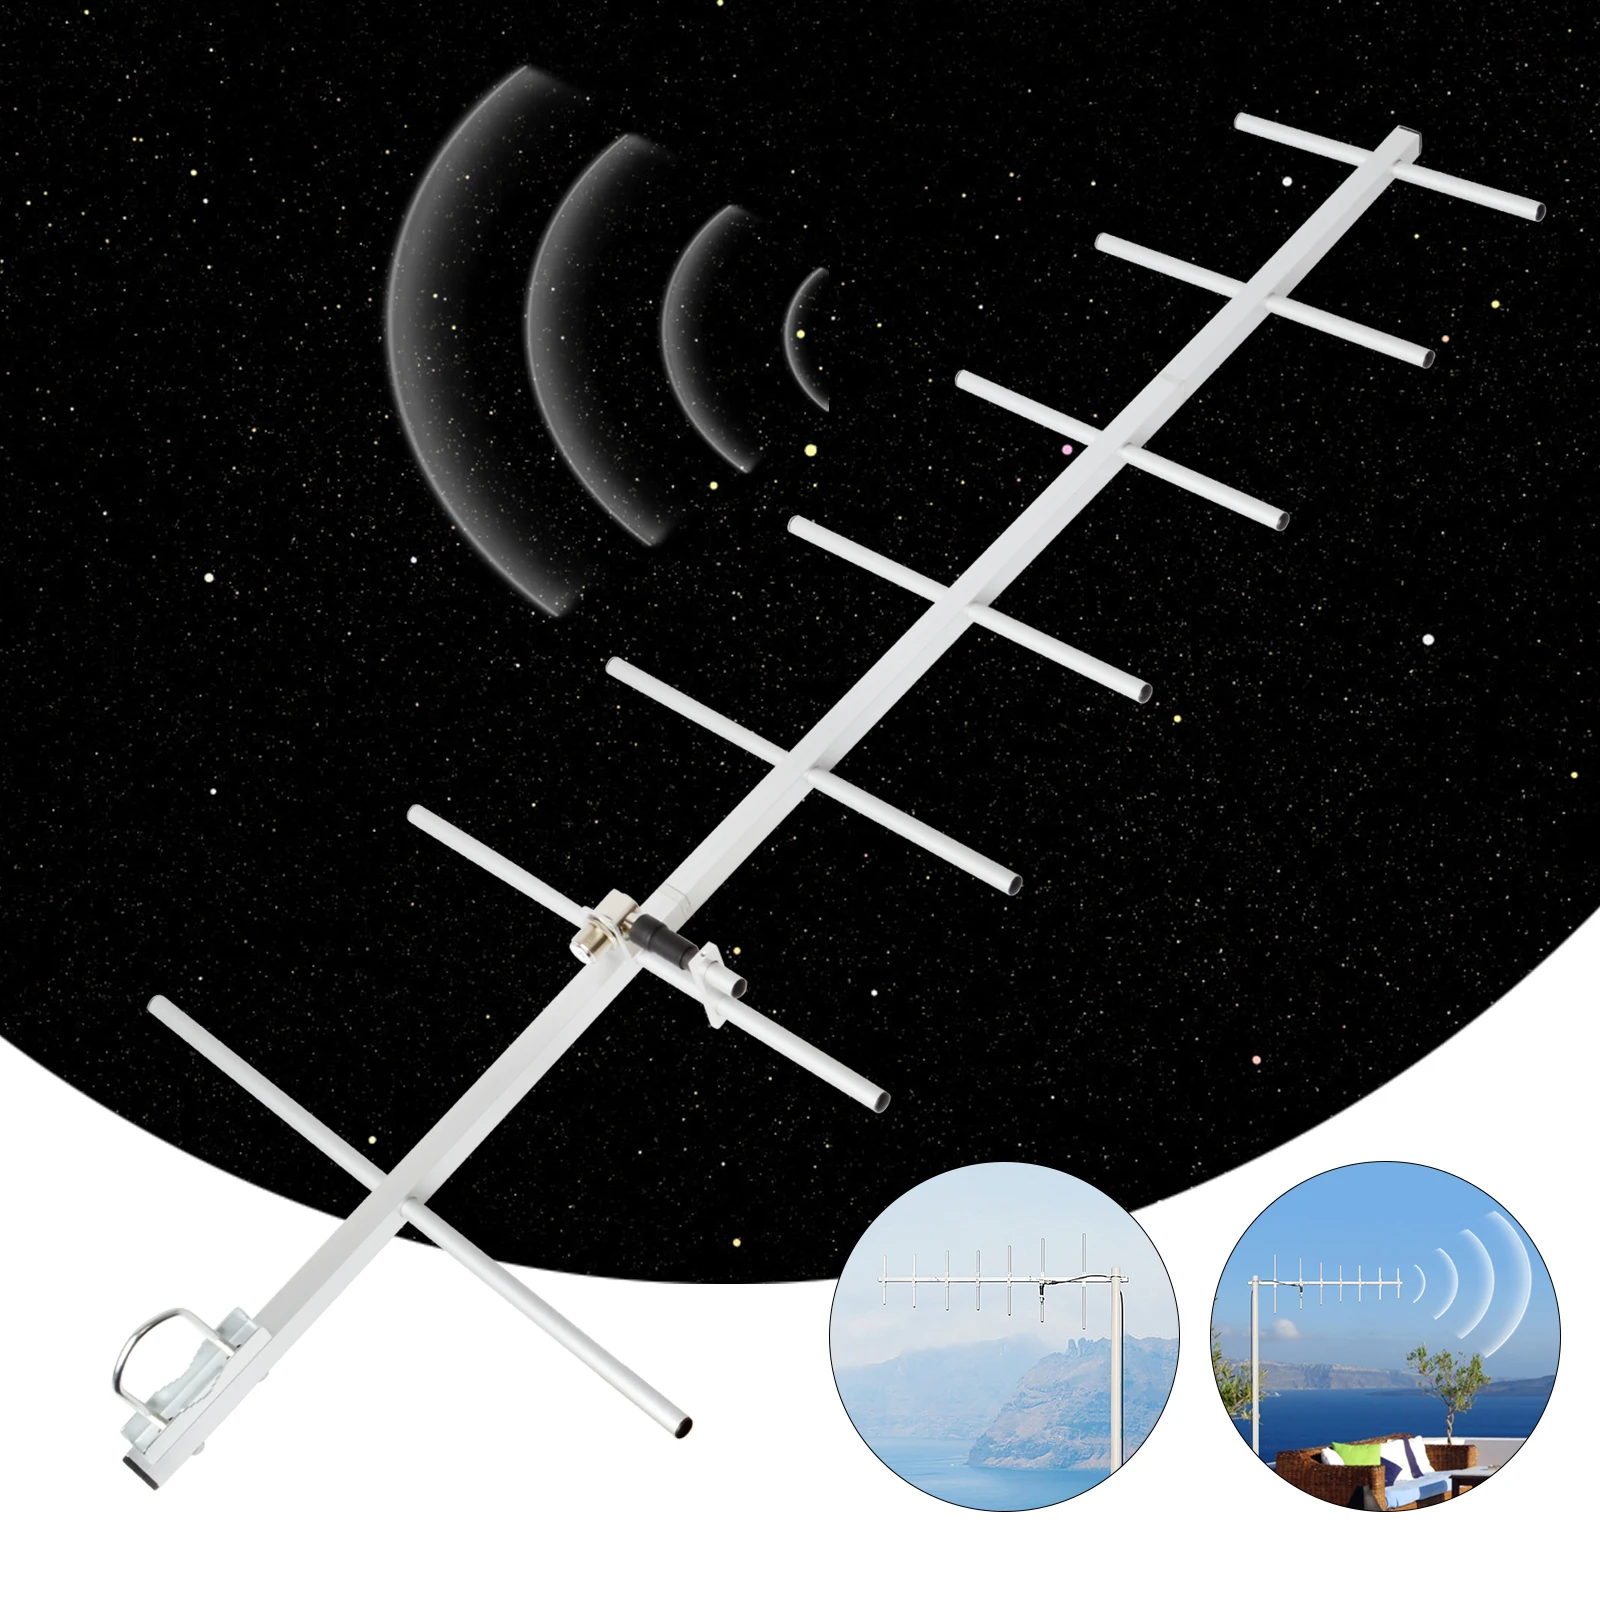 HYS UHF Yagi Antenna 400-470MHz High Gain 11 dBi Outdoor Base Station Antenna for Baofeng UV-5R  Yaesu Retevis Radio Repeater